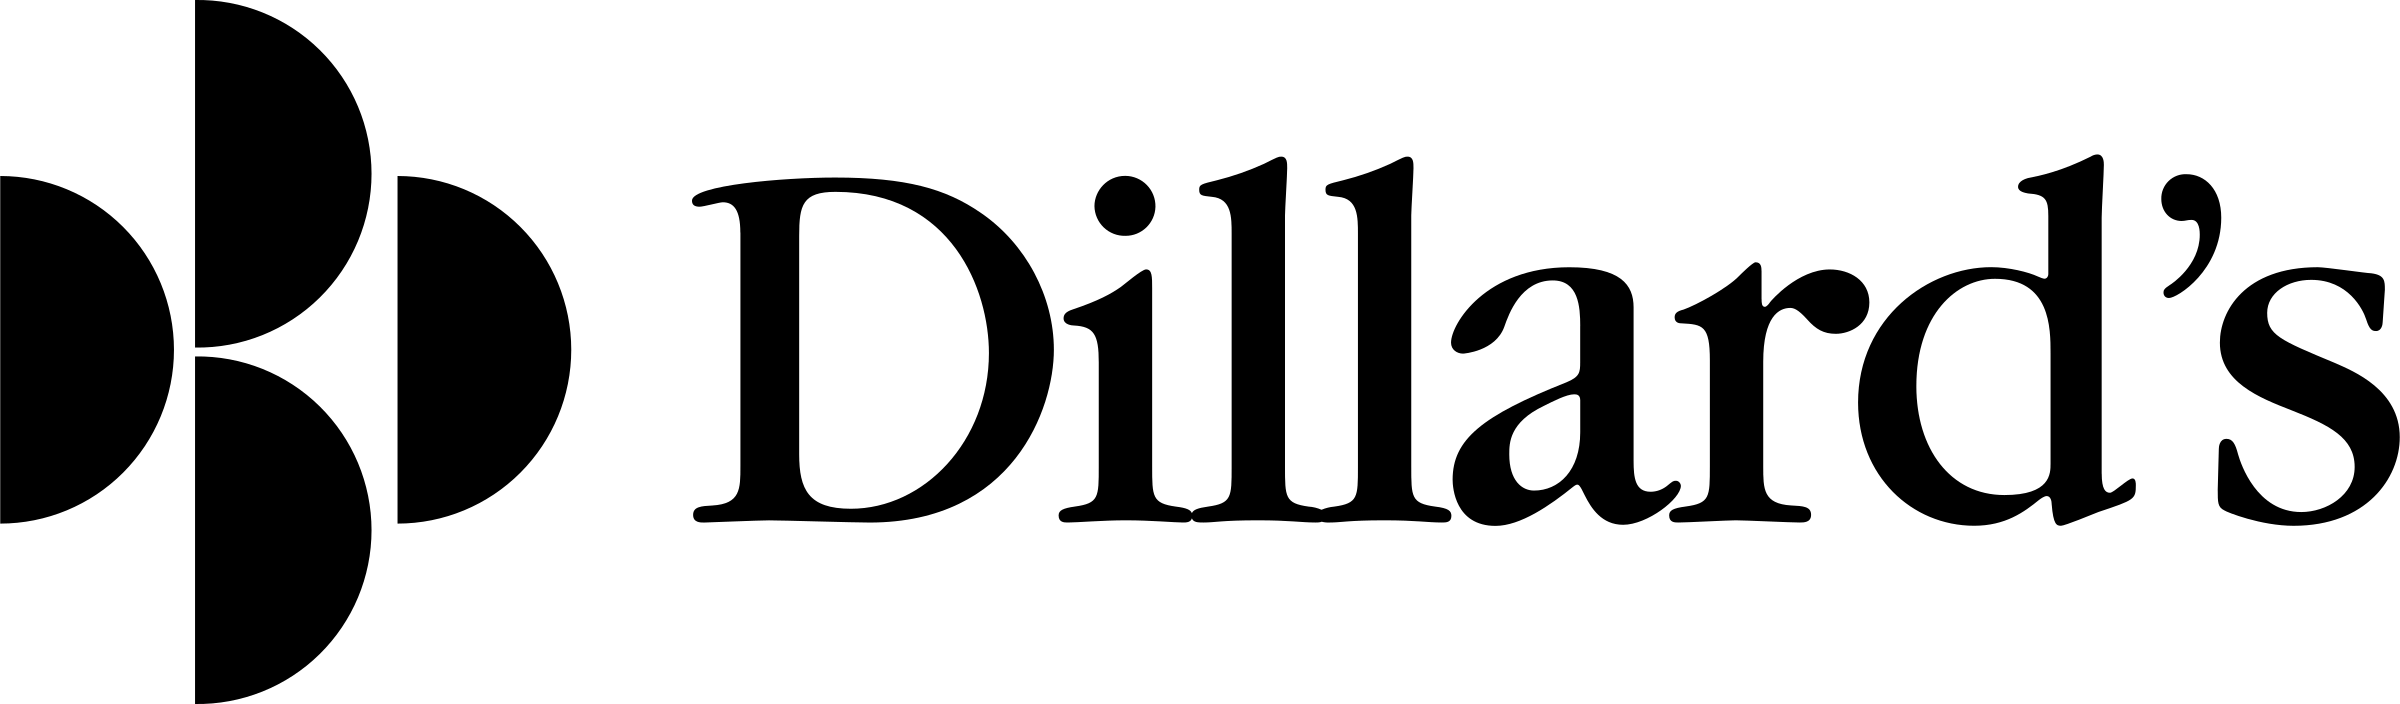 Dillard's Logo - Dillard's Logo PNG Transparent & SVG Vector - Freebie Supply